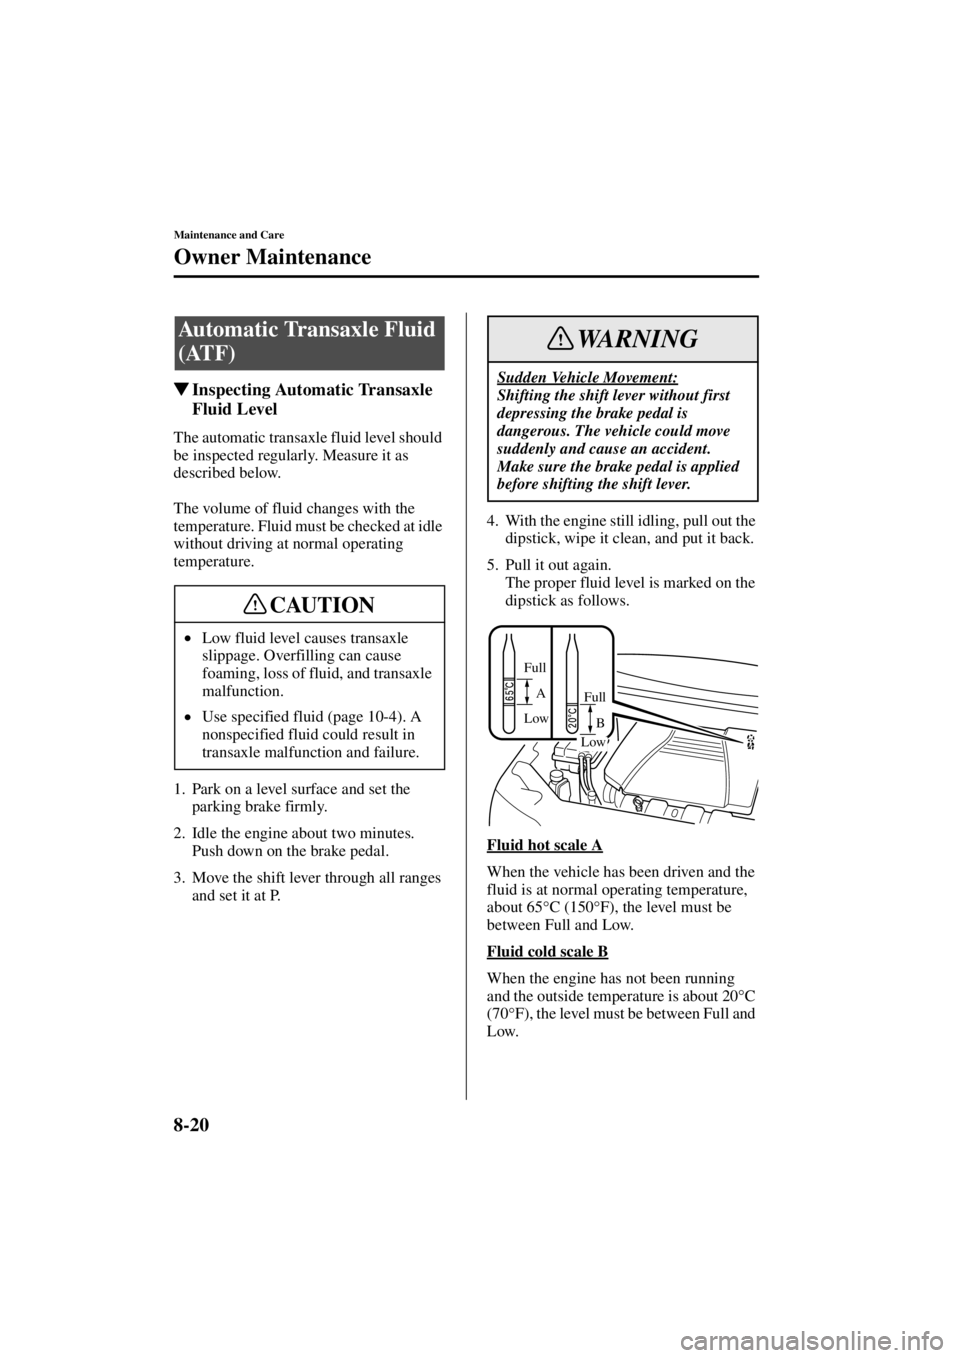 MAZDA MODEL 3 5-DOOR 2004 User Guide 8-20
Maintenance and Care
Owner Maintenance
Form No. 8S18-EA-03I
Inspecting Automatic Transaxle 
Fluid Level
The automatic transaxle fluid level should 
be inspected regularly. Measure it as 
describ